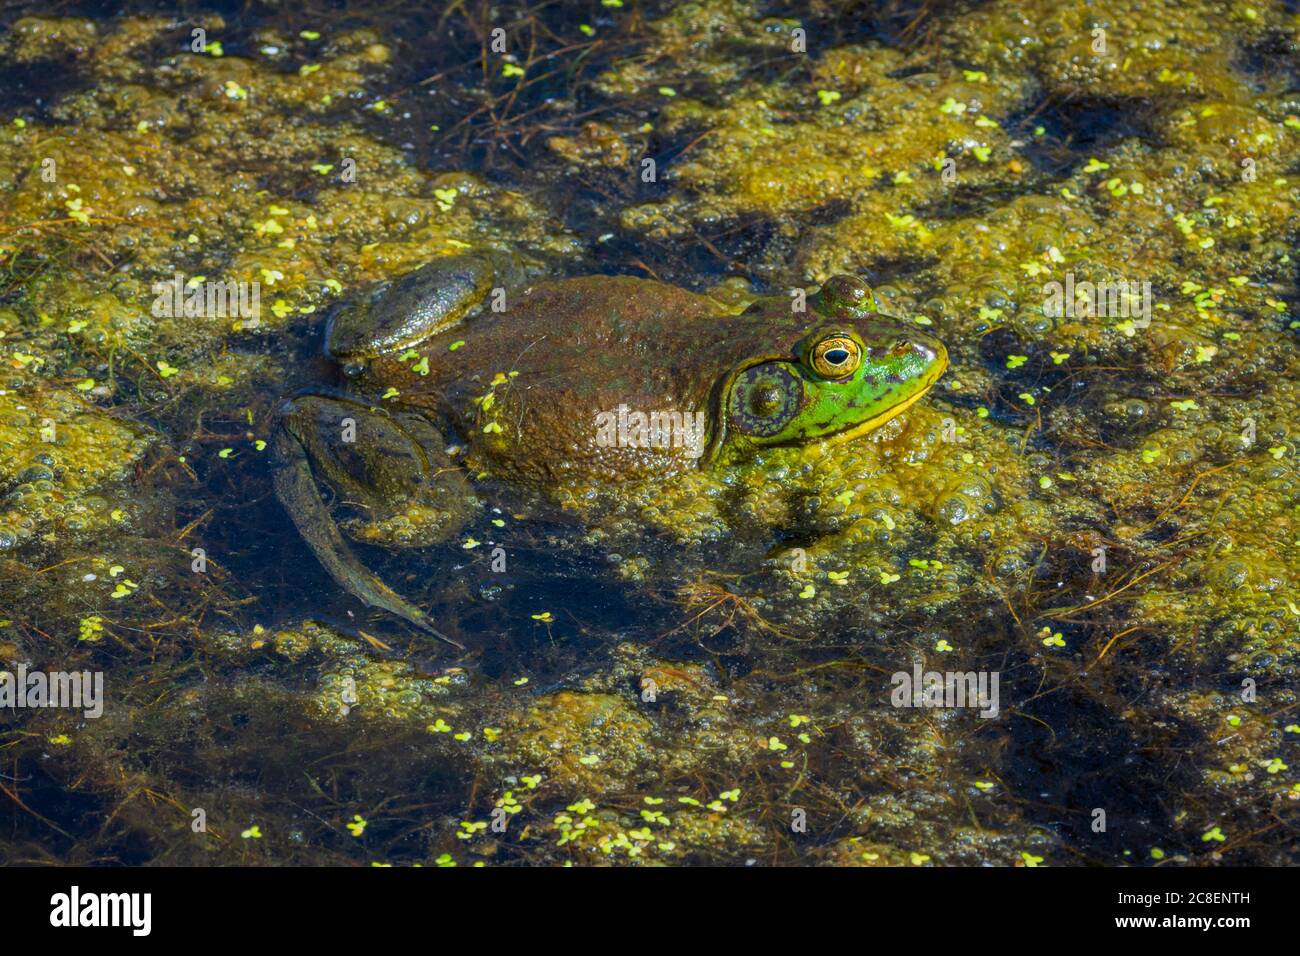 Male American Bullfrog resting on surface of wetlands marsh among duckweed and organic vegetation, Castle Rock Colorado USA. Photo taken in July. Stock Photo